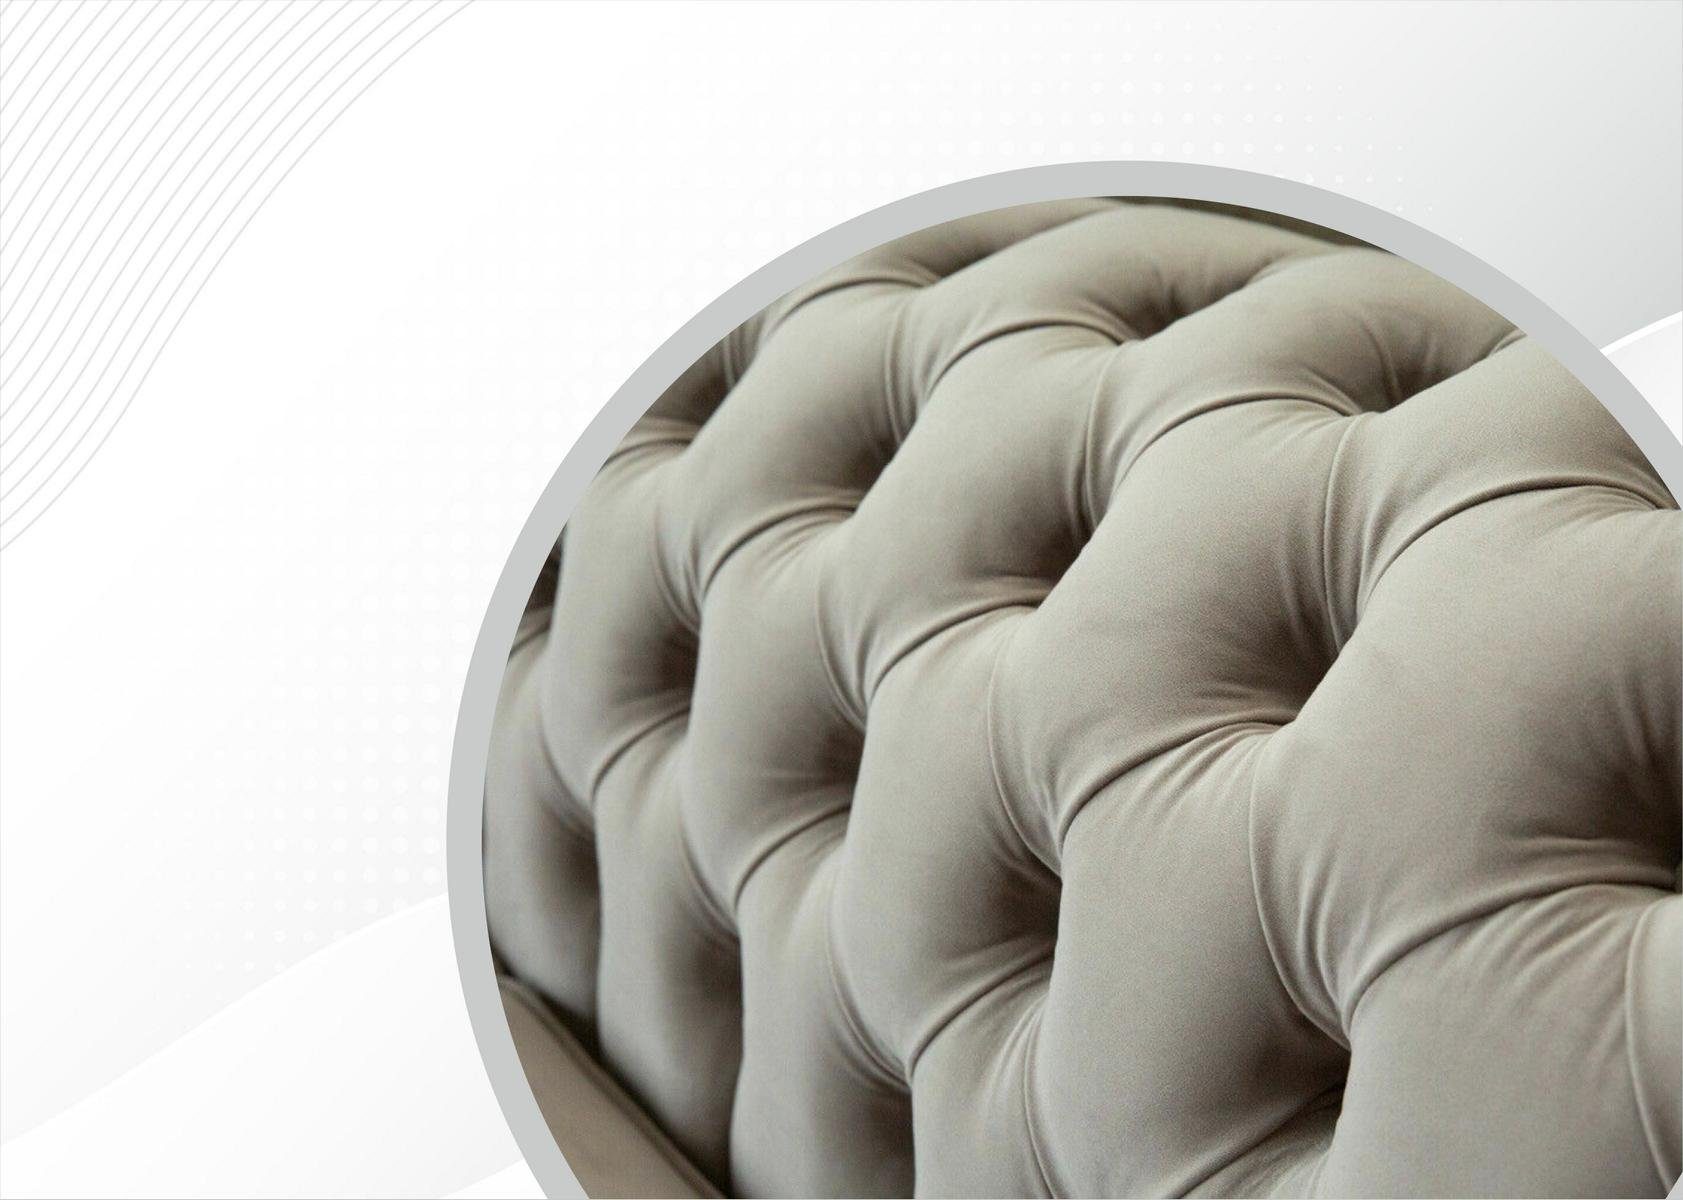 Sofa 225 cm 3 JVmoebel Sitzer Couch Chesterfield Design Chesterfield-Sofa,